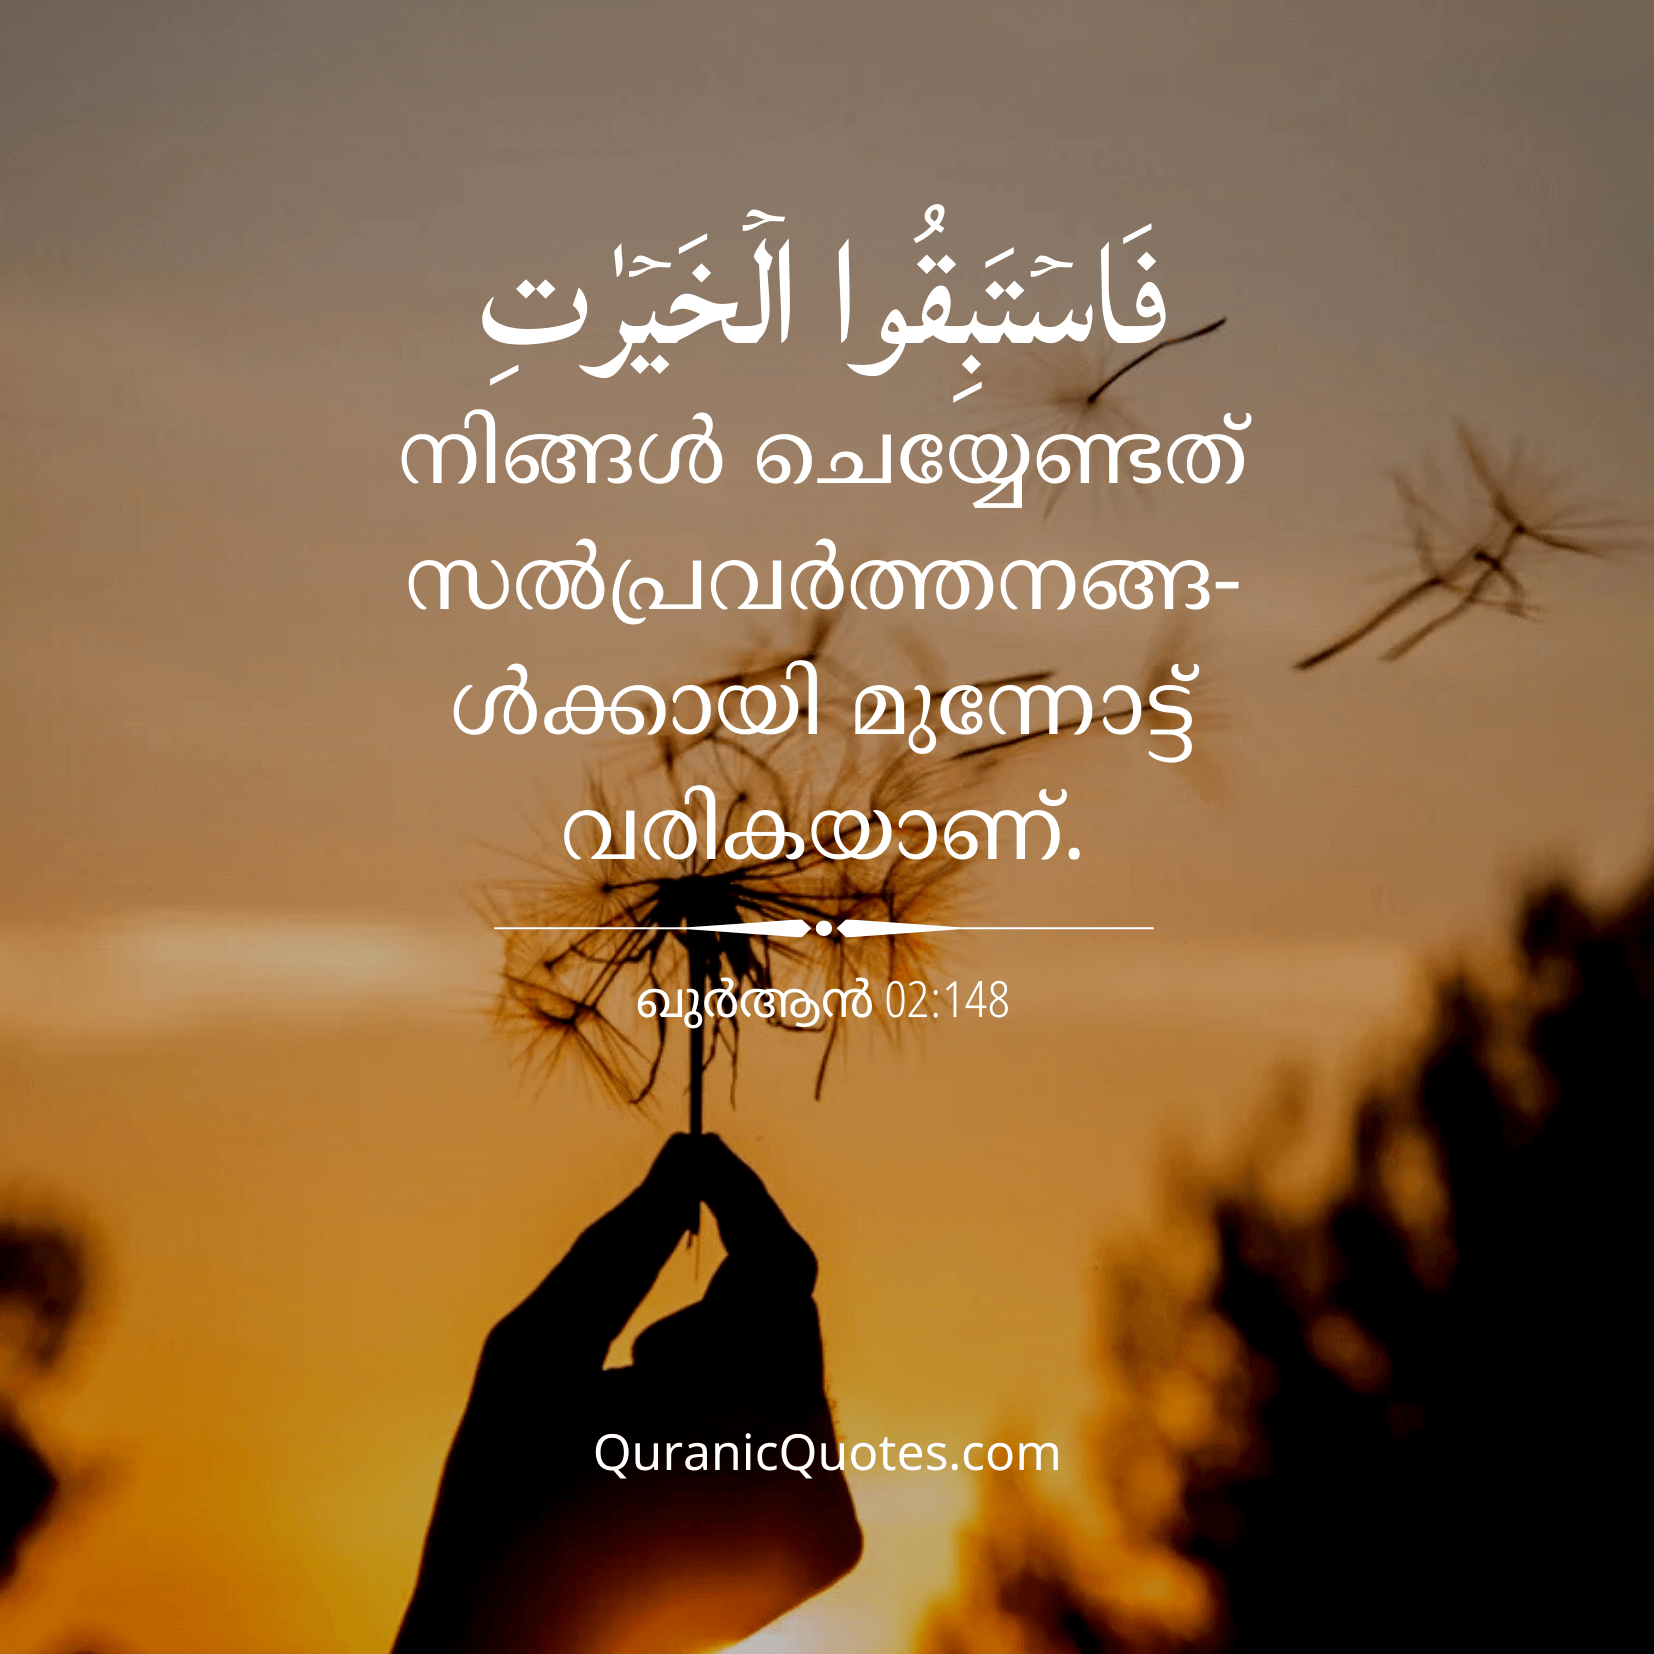 Quranic Quotes in Malayalam 2:148